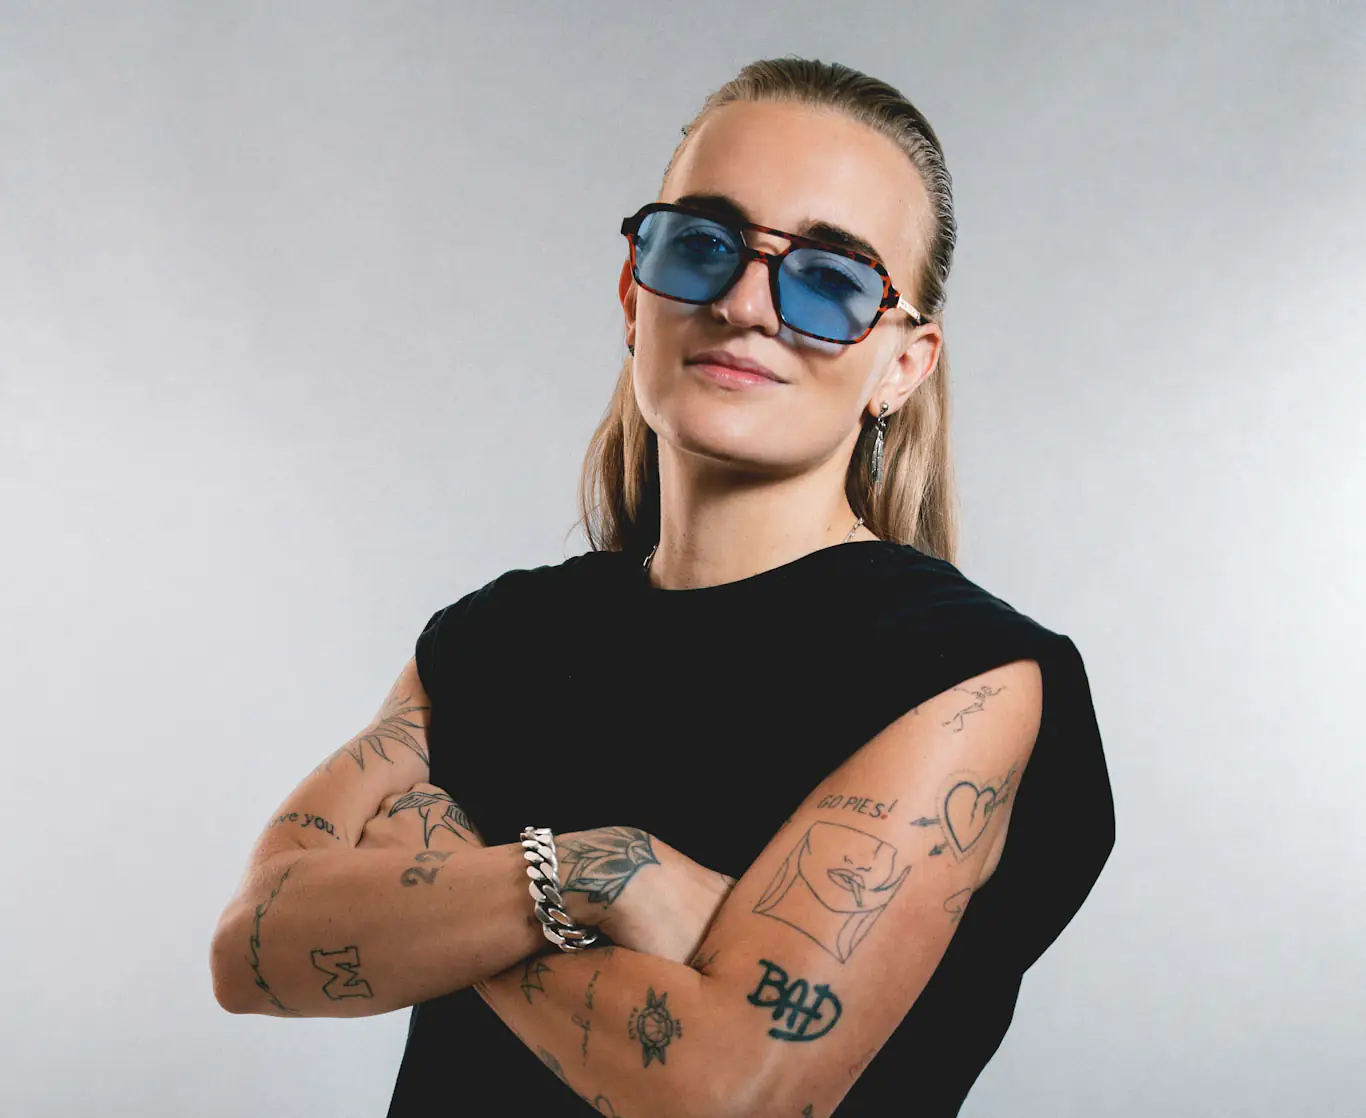 INTERVIEW: Australian pop-rocker G Flip on new single ‘Good Enough’